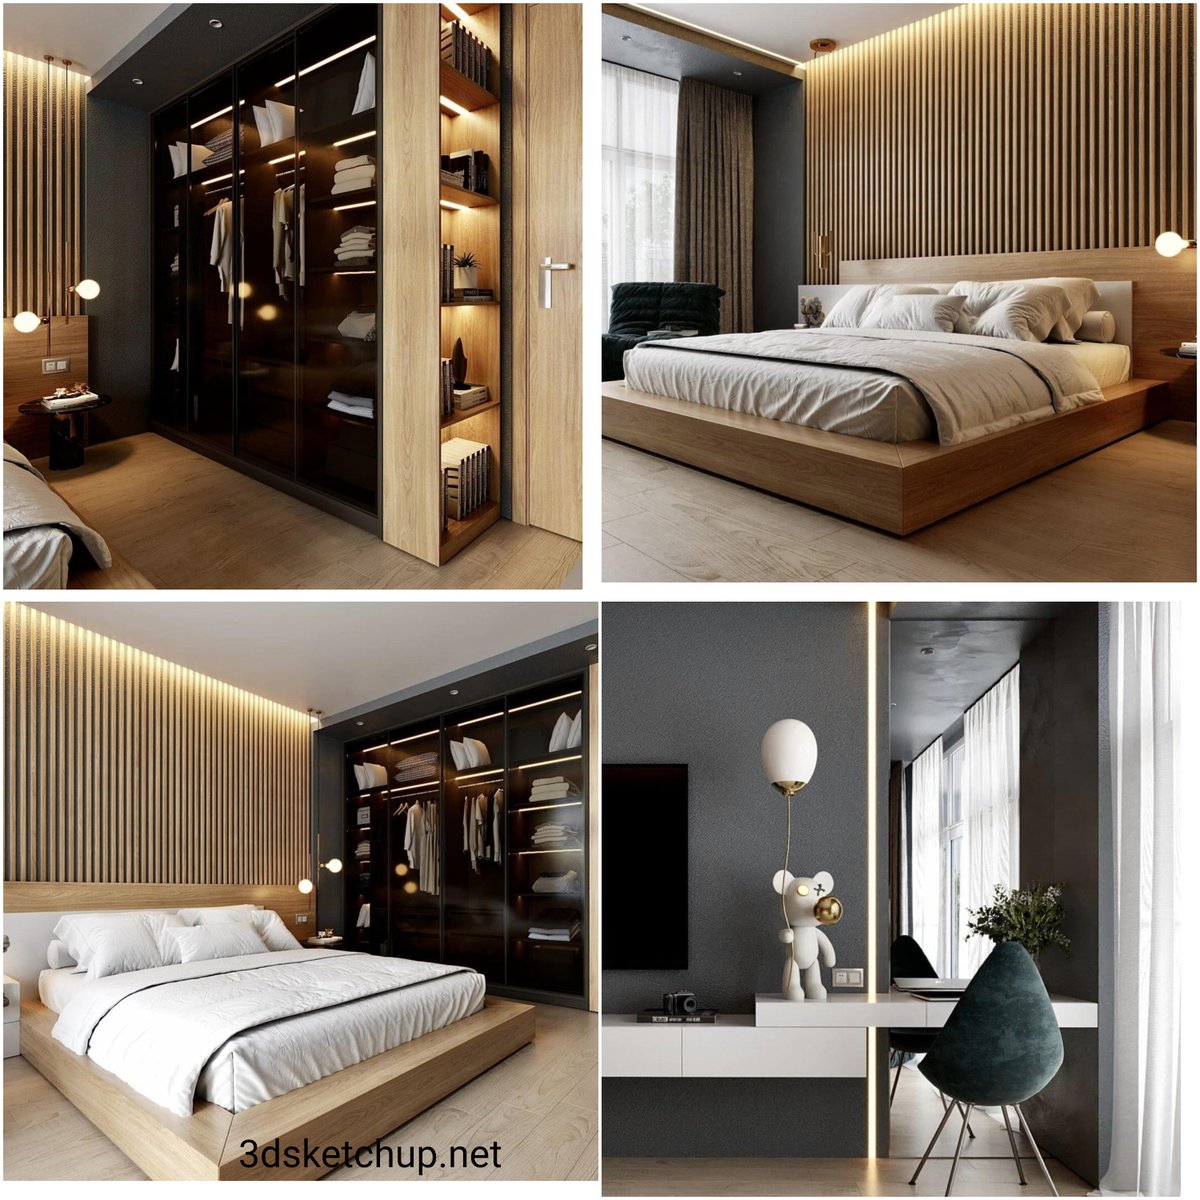 Bedroom Interior sketchup model 3dsketchup.net/download/bedro…